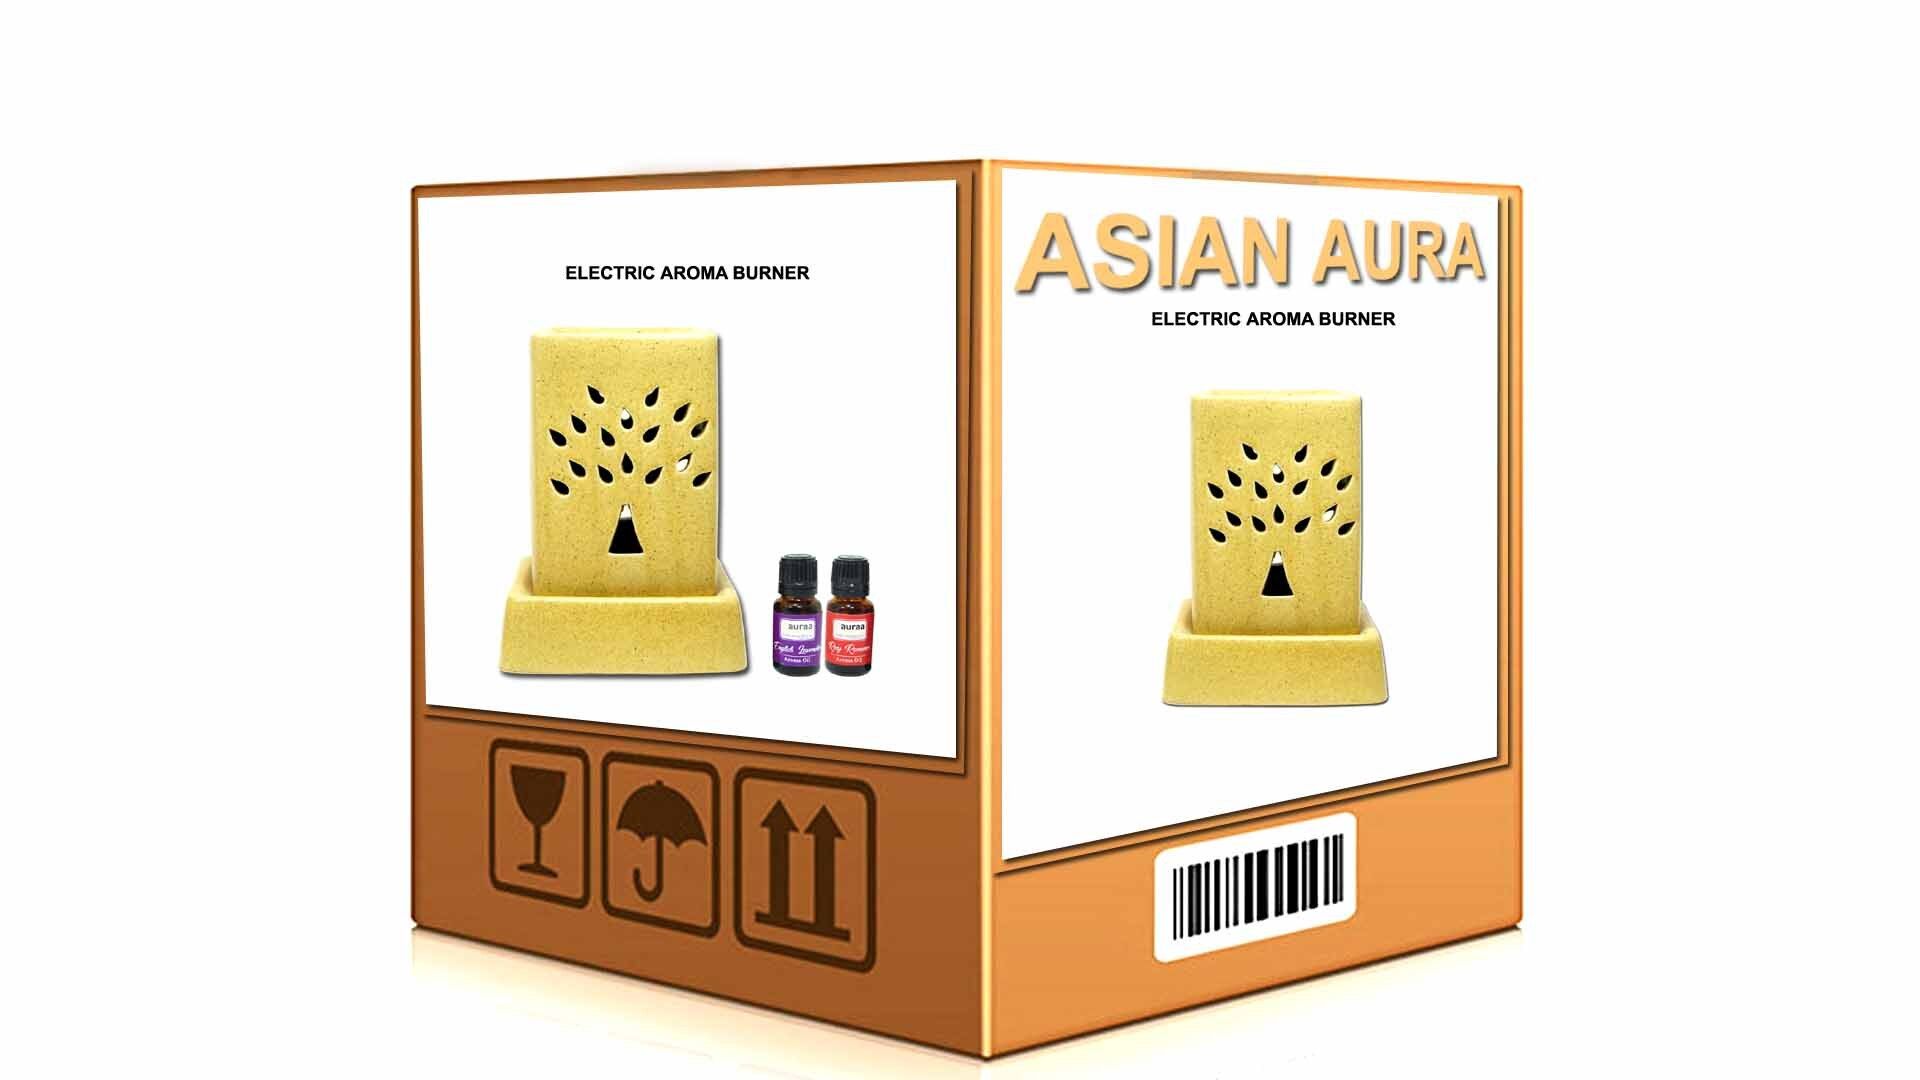 Asian Aura Ceramic Aromatic Oil Diffuser with 2 oil bottles AAEB 0015-B